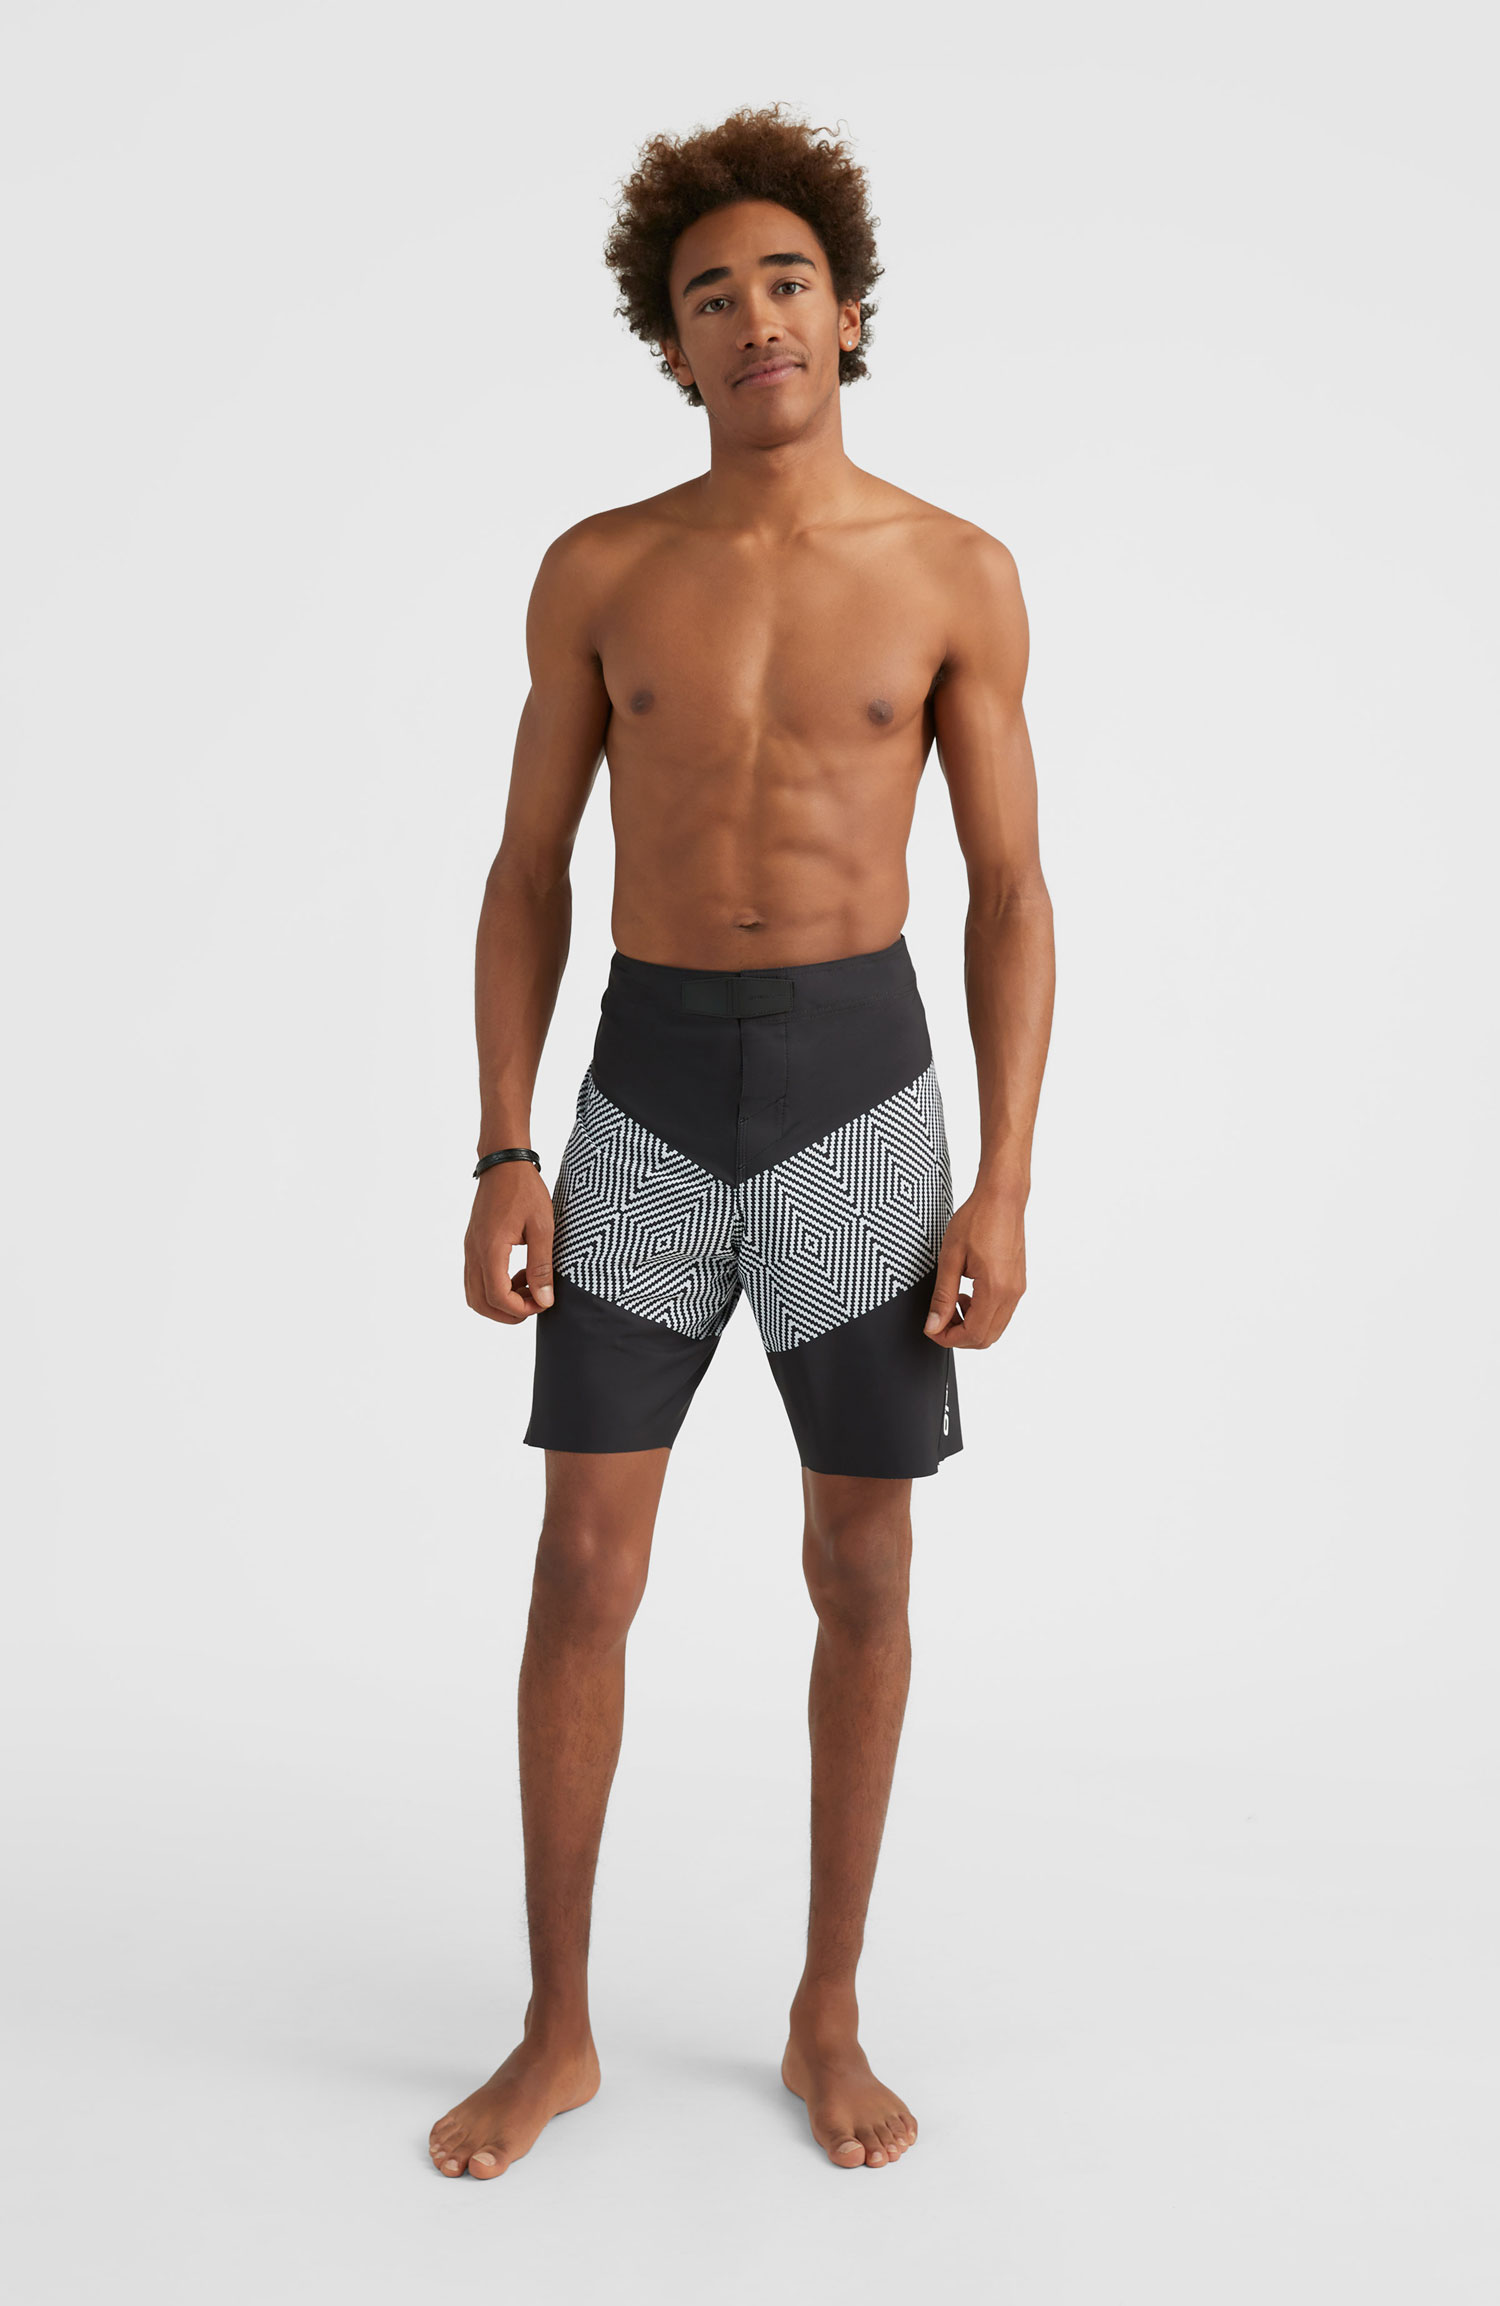 Men's swimming shorts